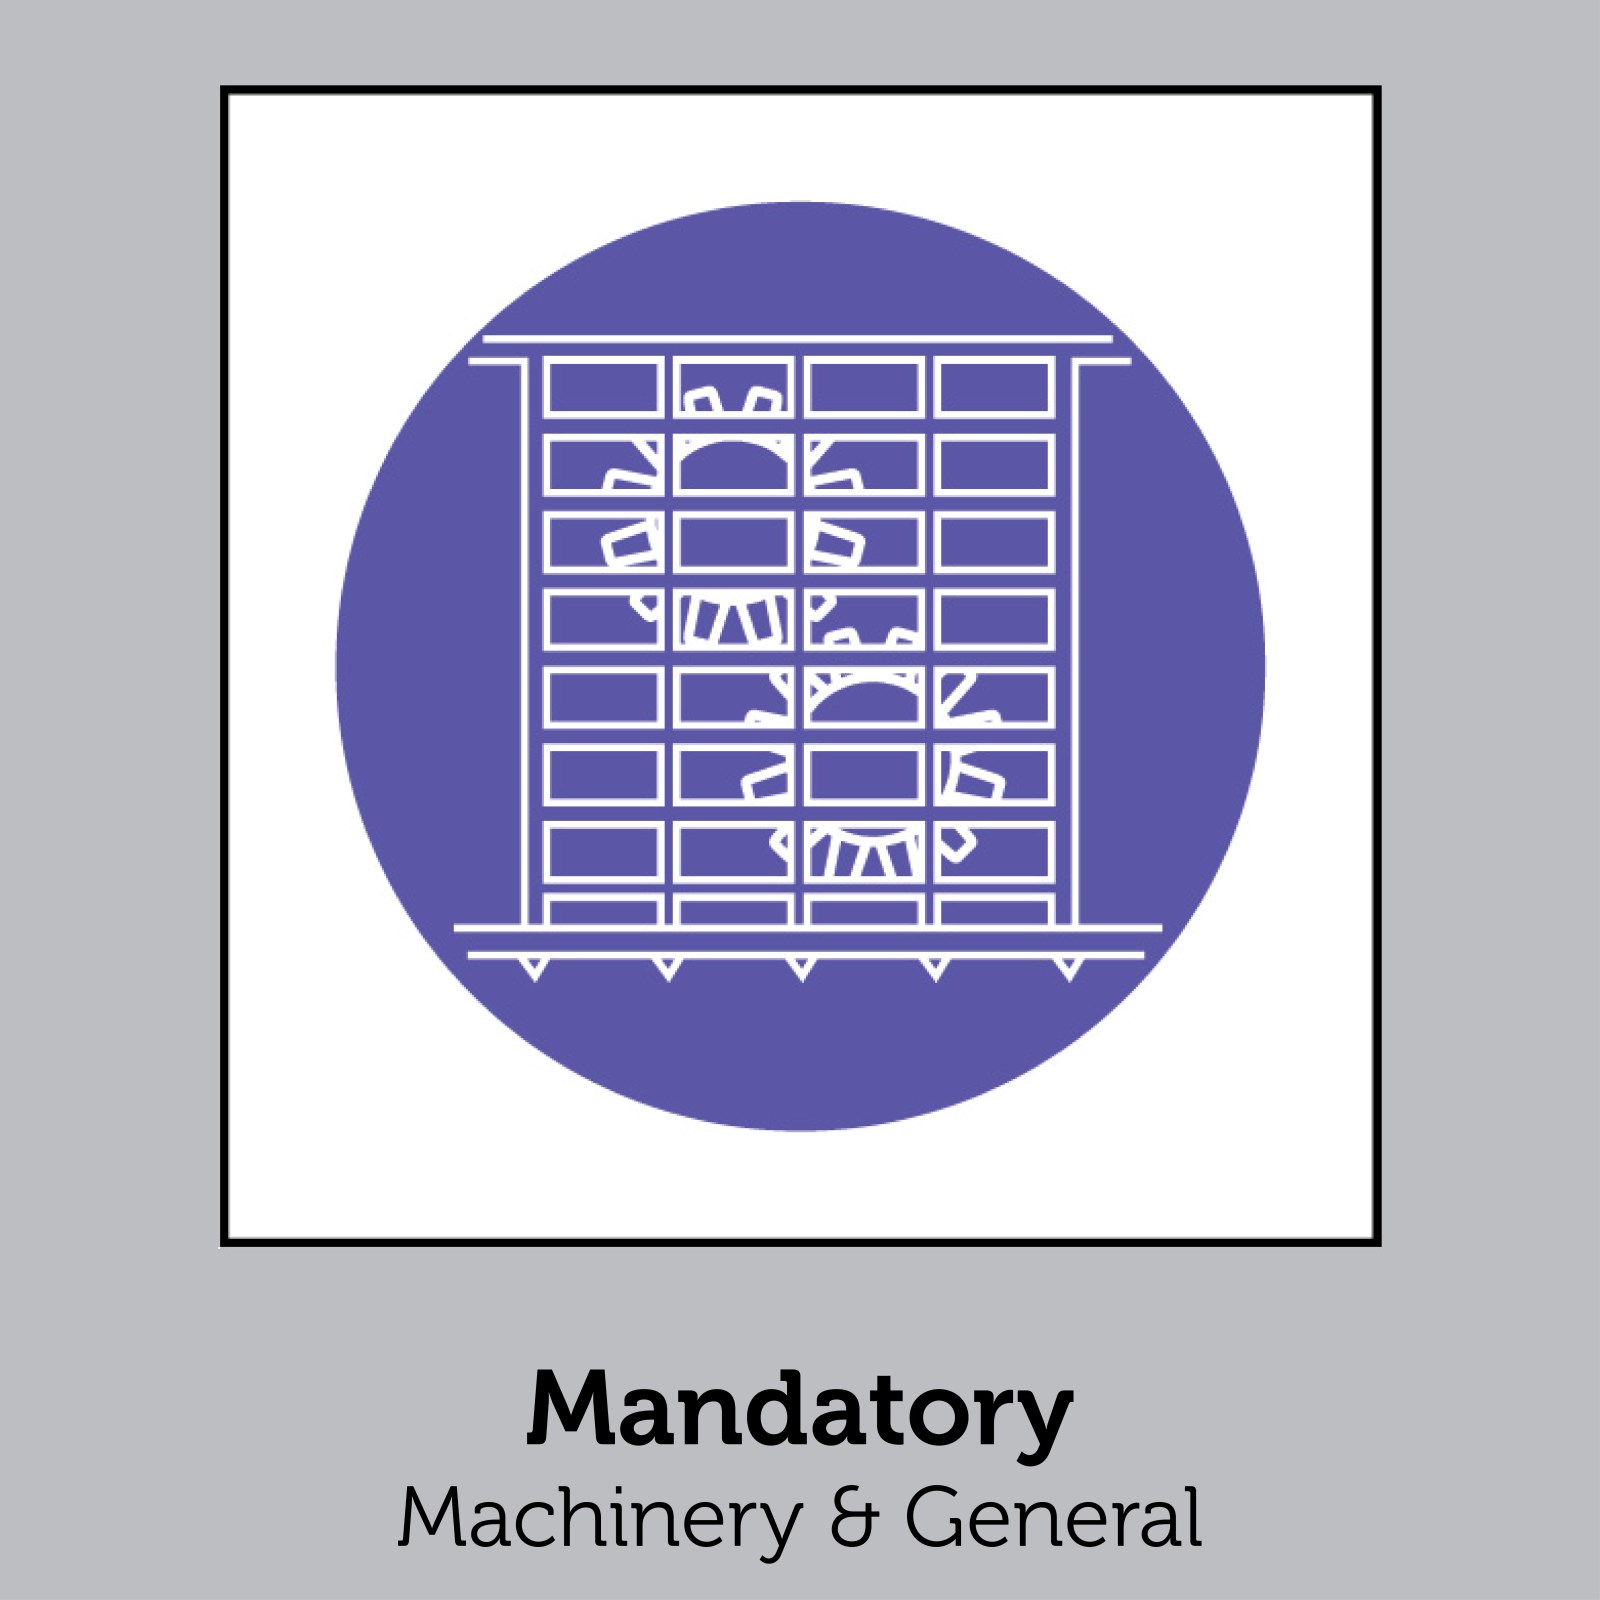 Mandatory - Machinery & General